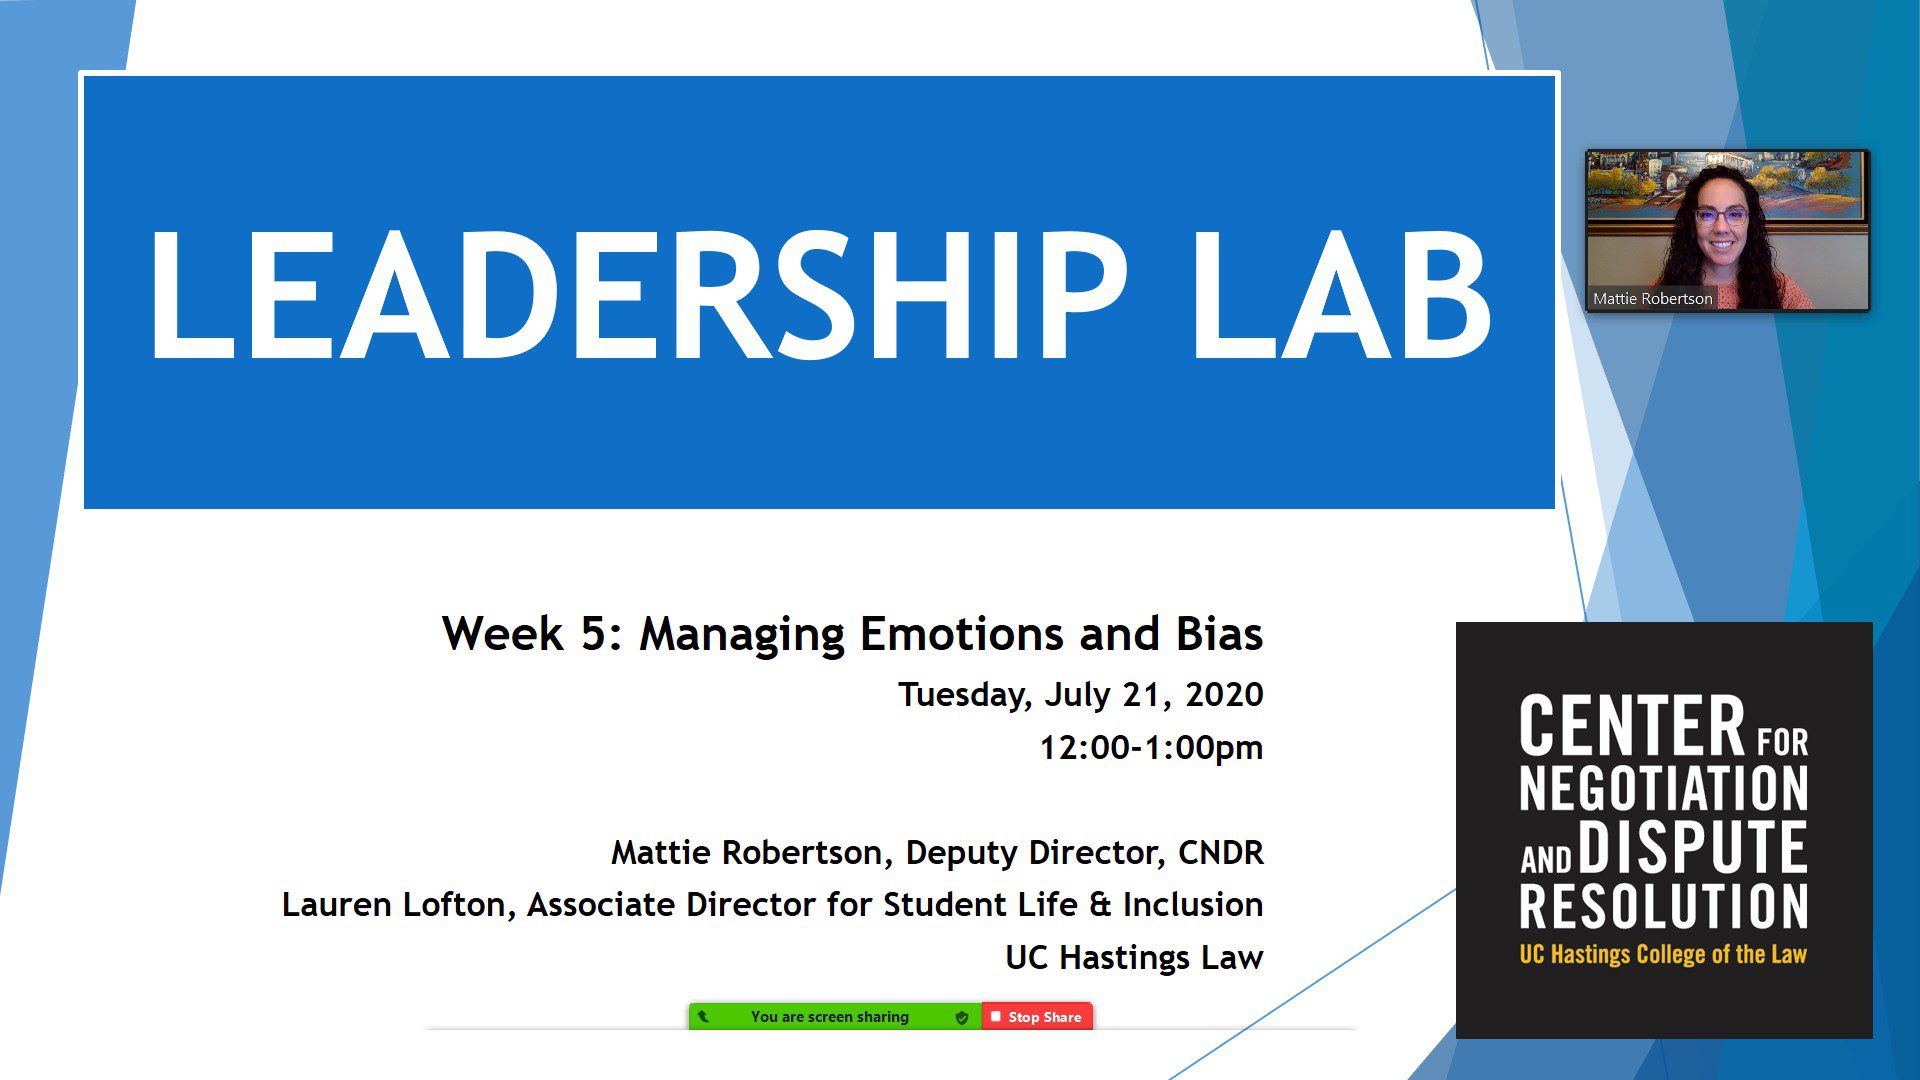 CNDR’s Deputy Director Mattie Robertson Teaching Leadership Lab Online